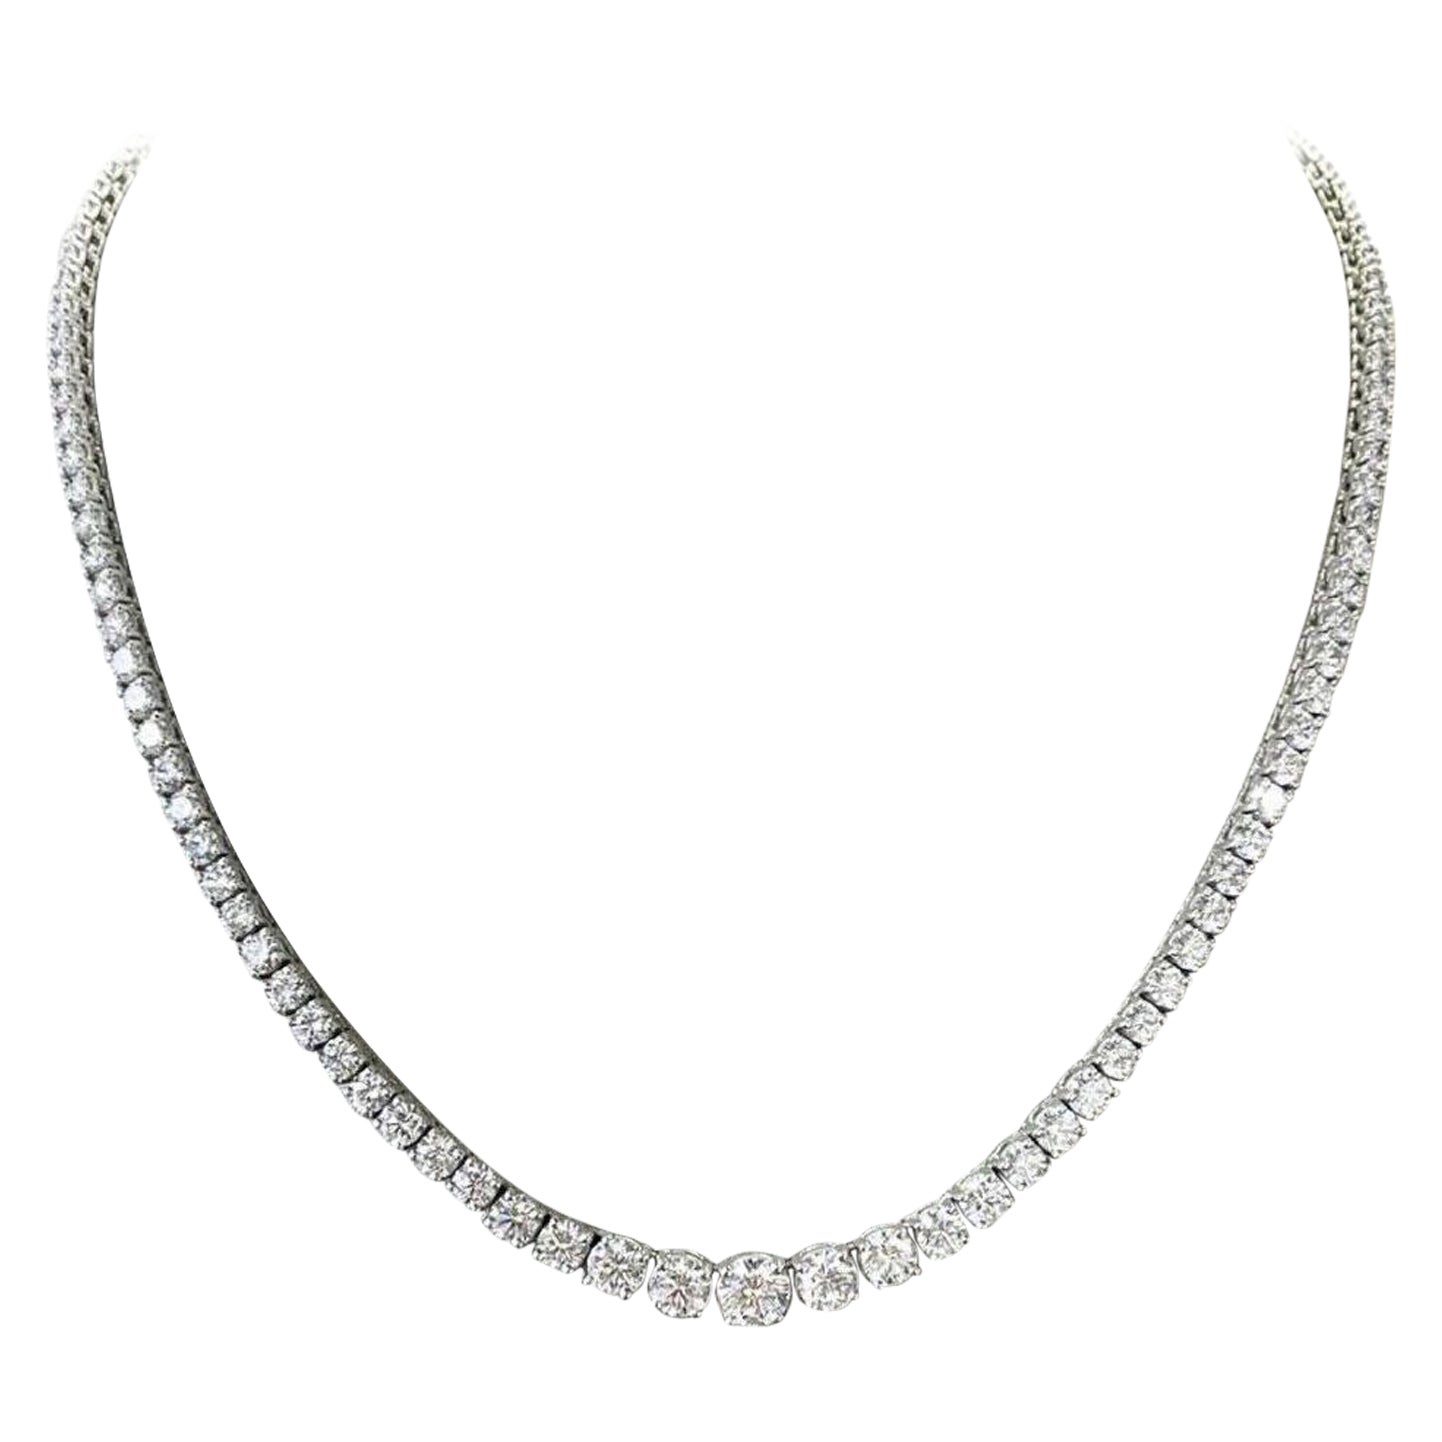 Kwiat Riviera Diamond Tennis Necklace Set in Platinum with 15.12 TCW